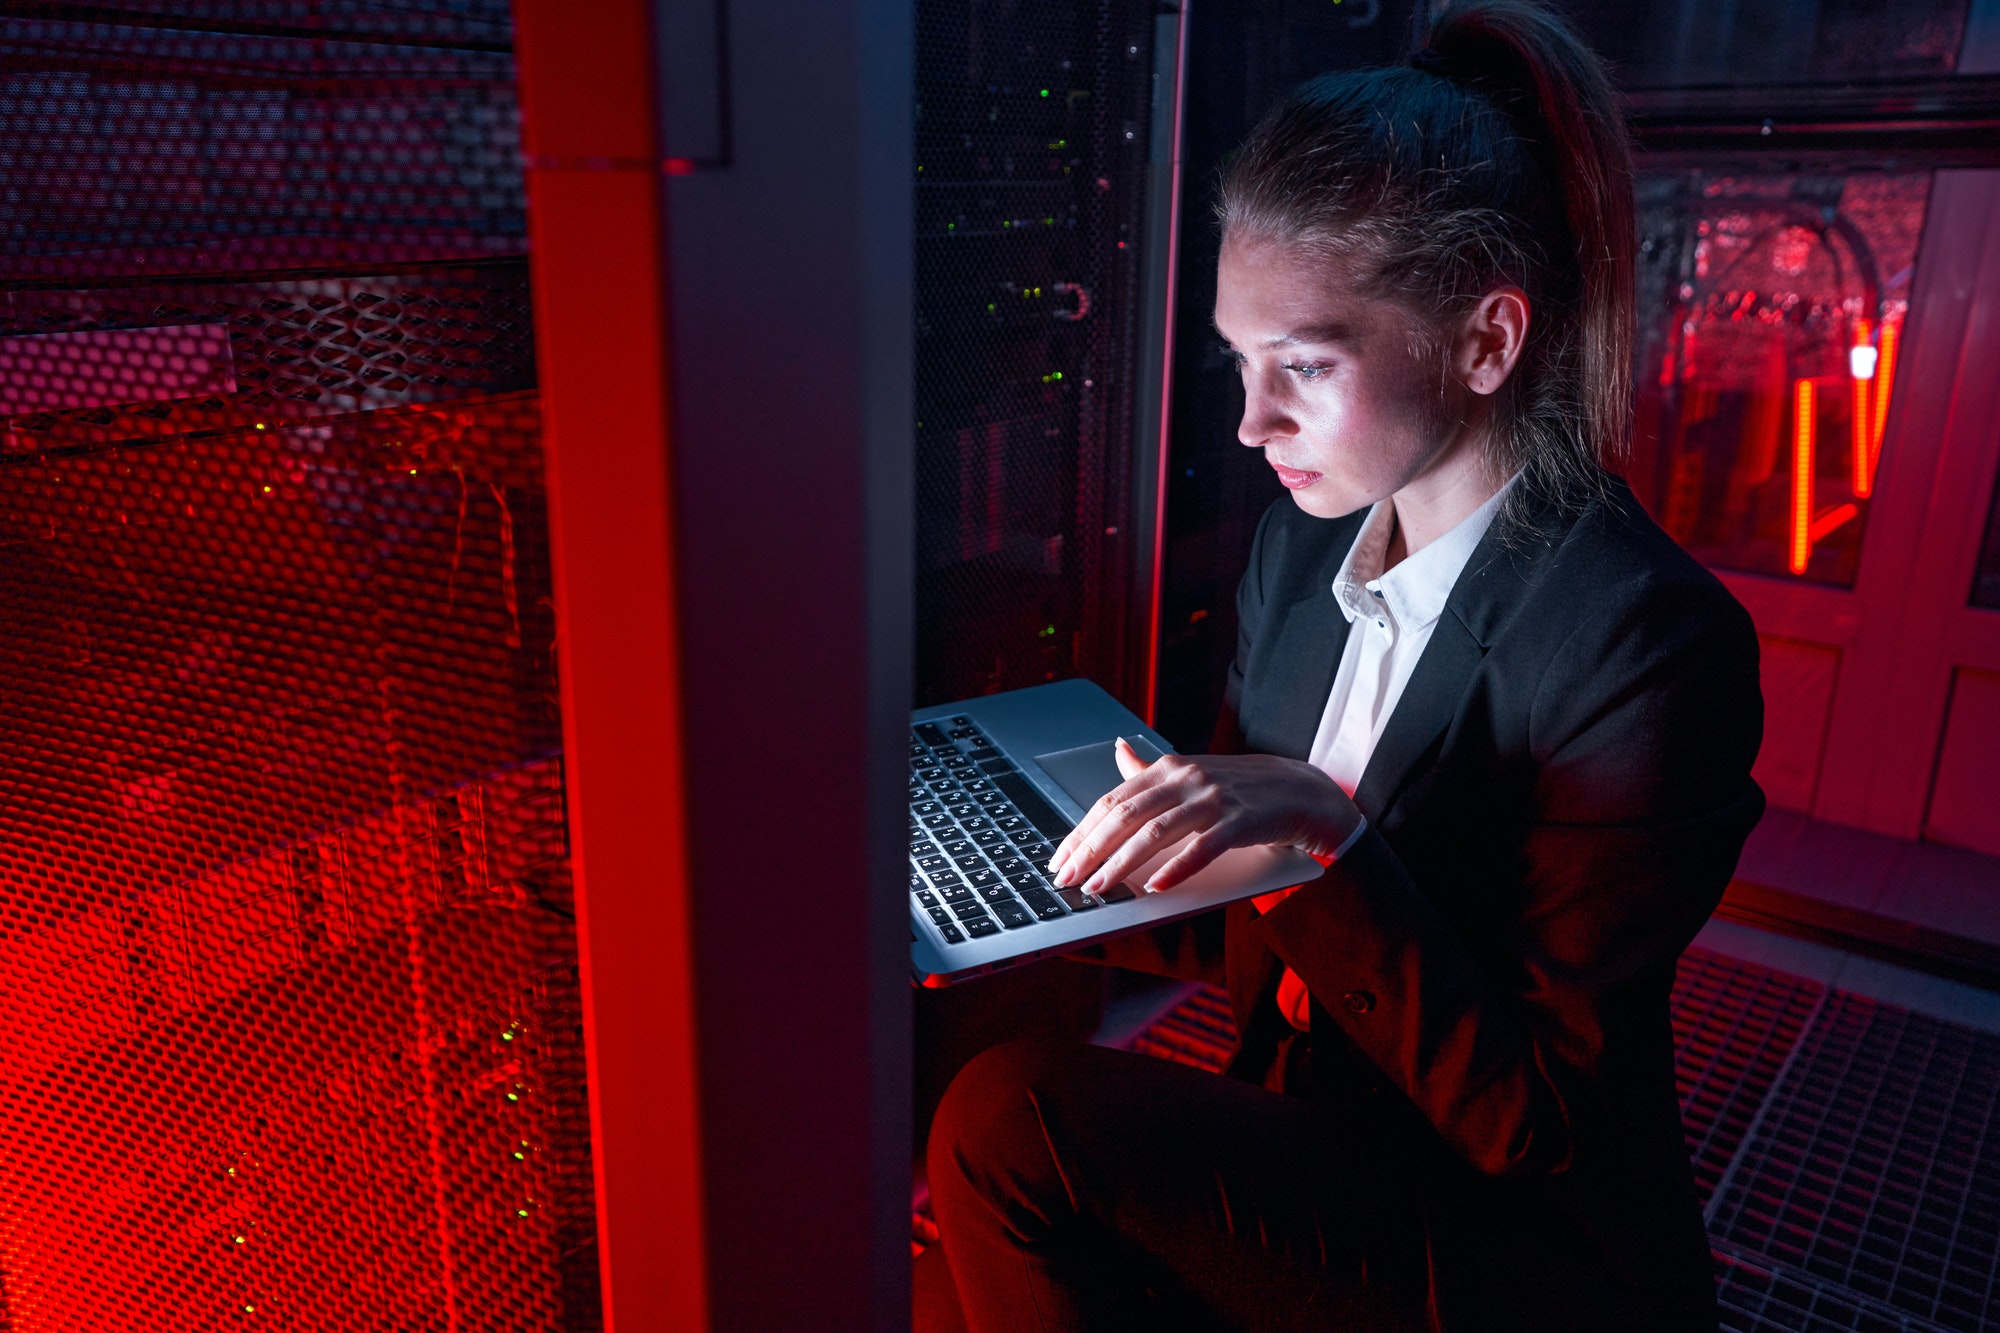 Female technician using laptop to analyze server